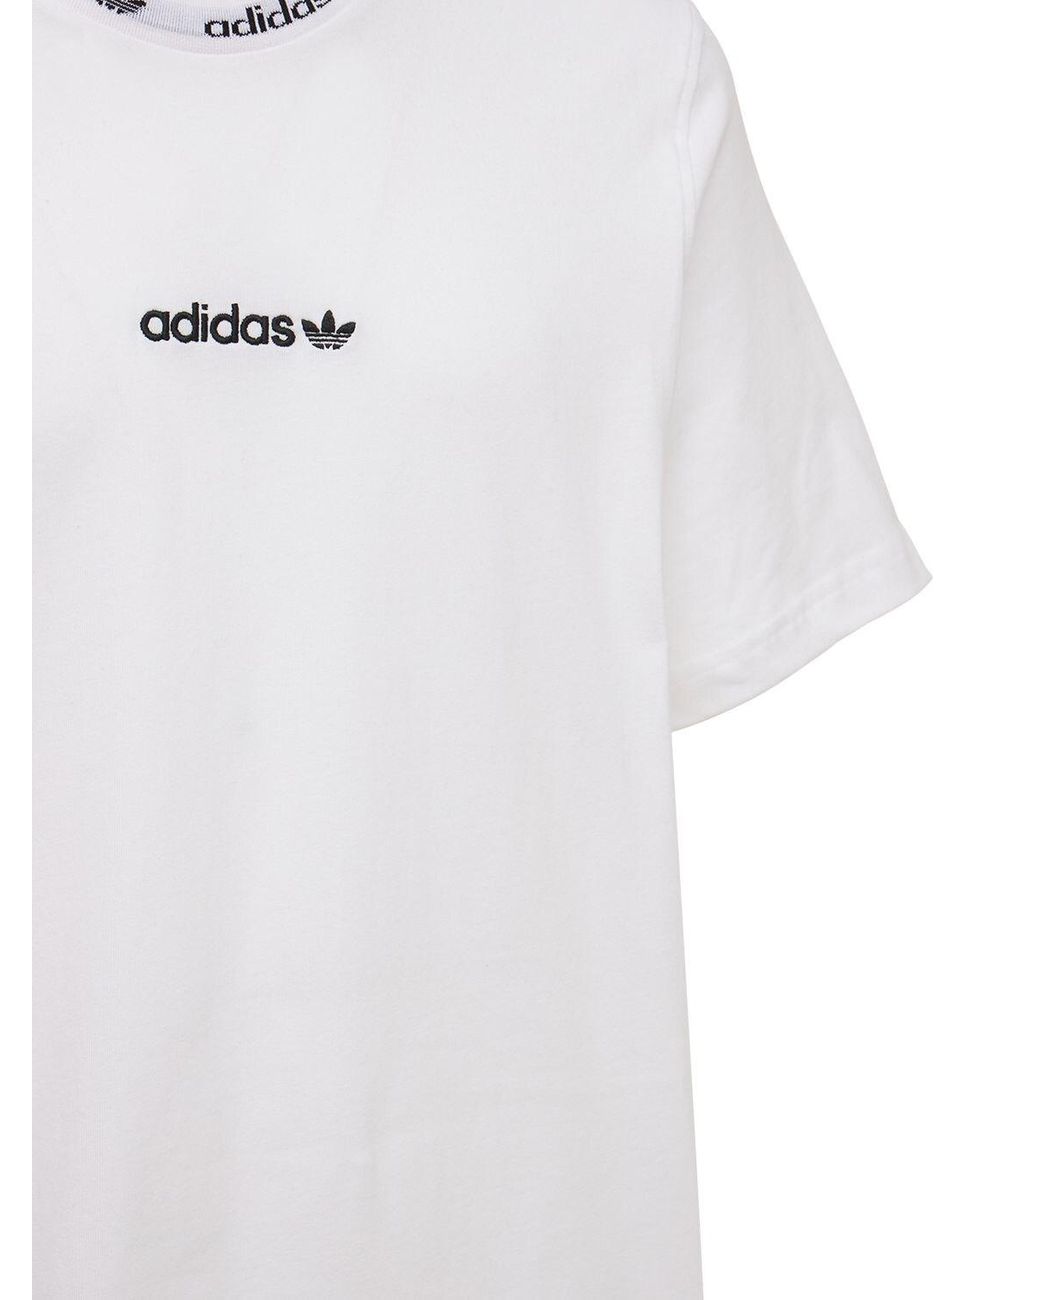 adidas Originals Trefoil Linear Cotton T-shirt in White for Men | Lyst